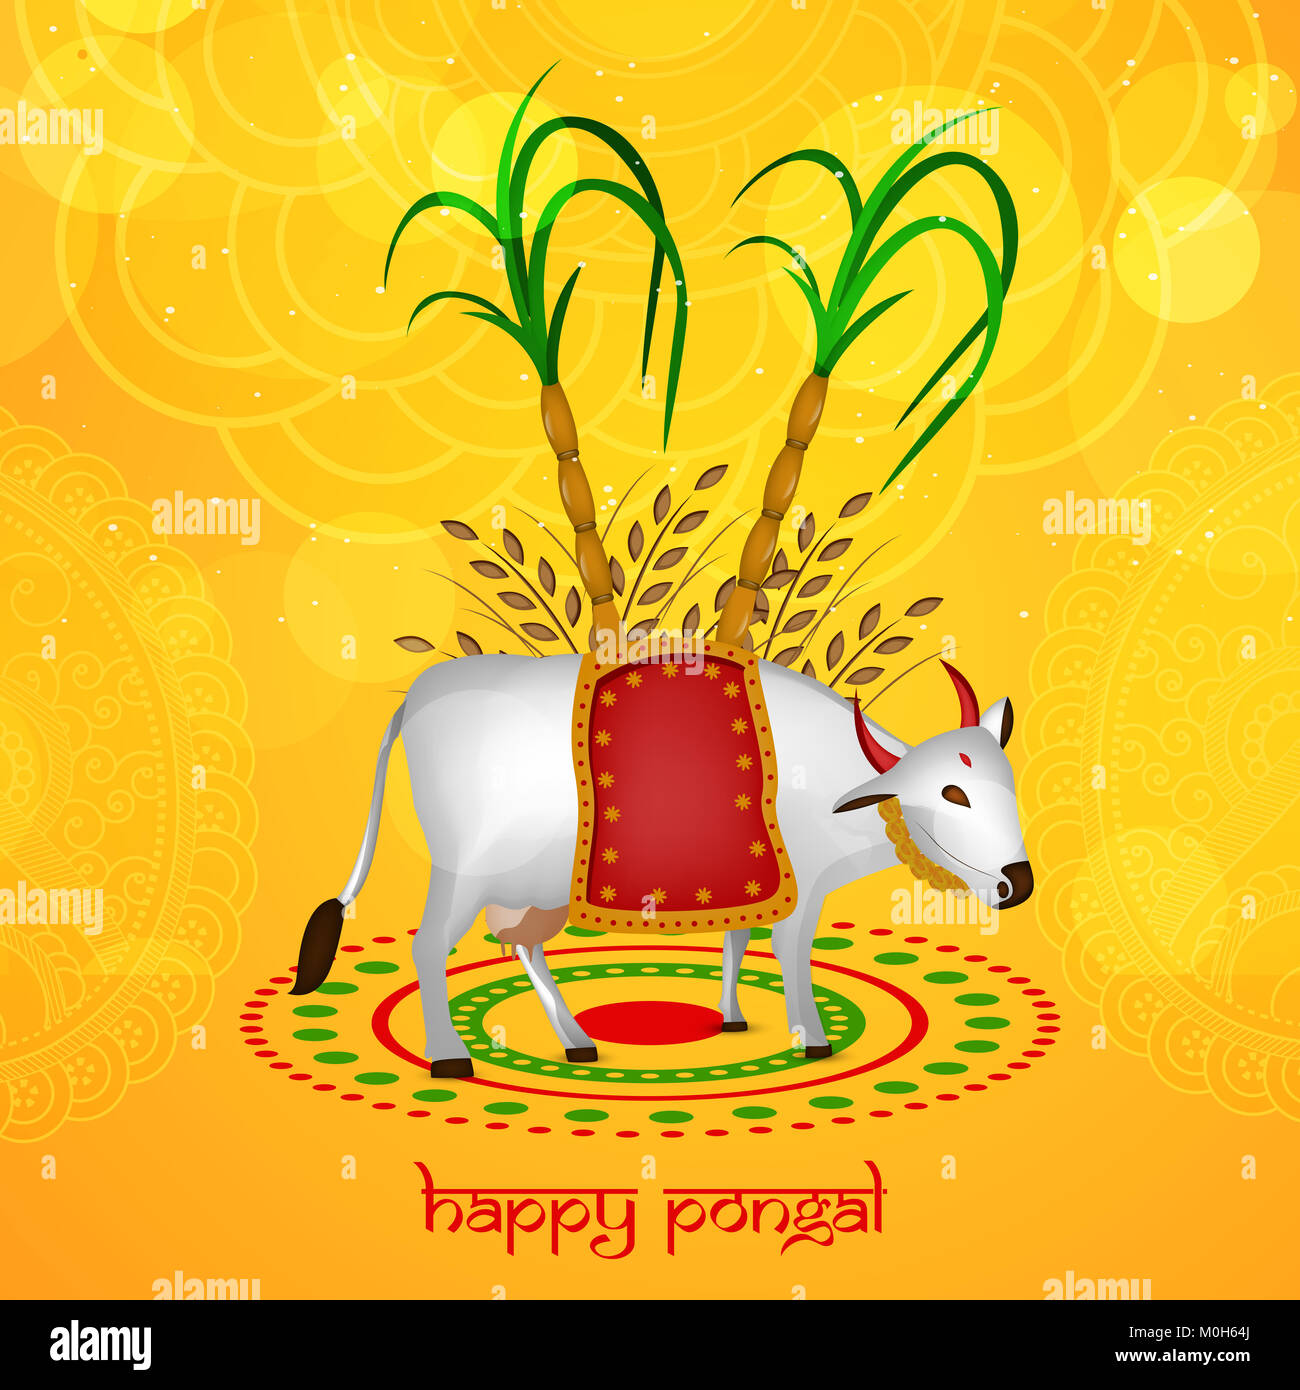 illustration of Indian festival Pongal background Stock Photo - Alamy